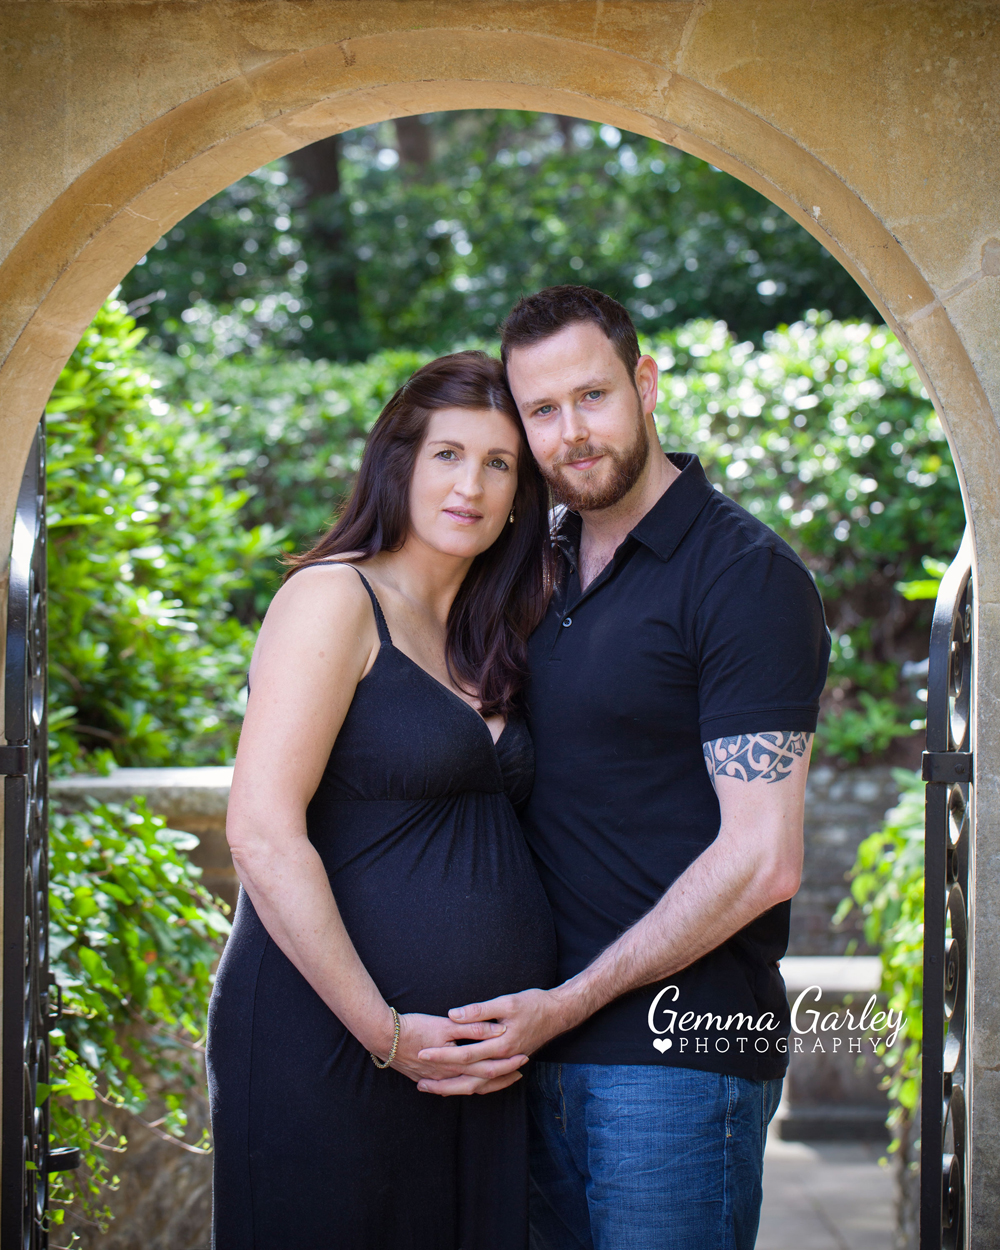 pregnancy maternity-photography-bournemouth-poole-dorset-gemma-garley-photography copy.jpg